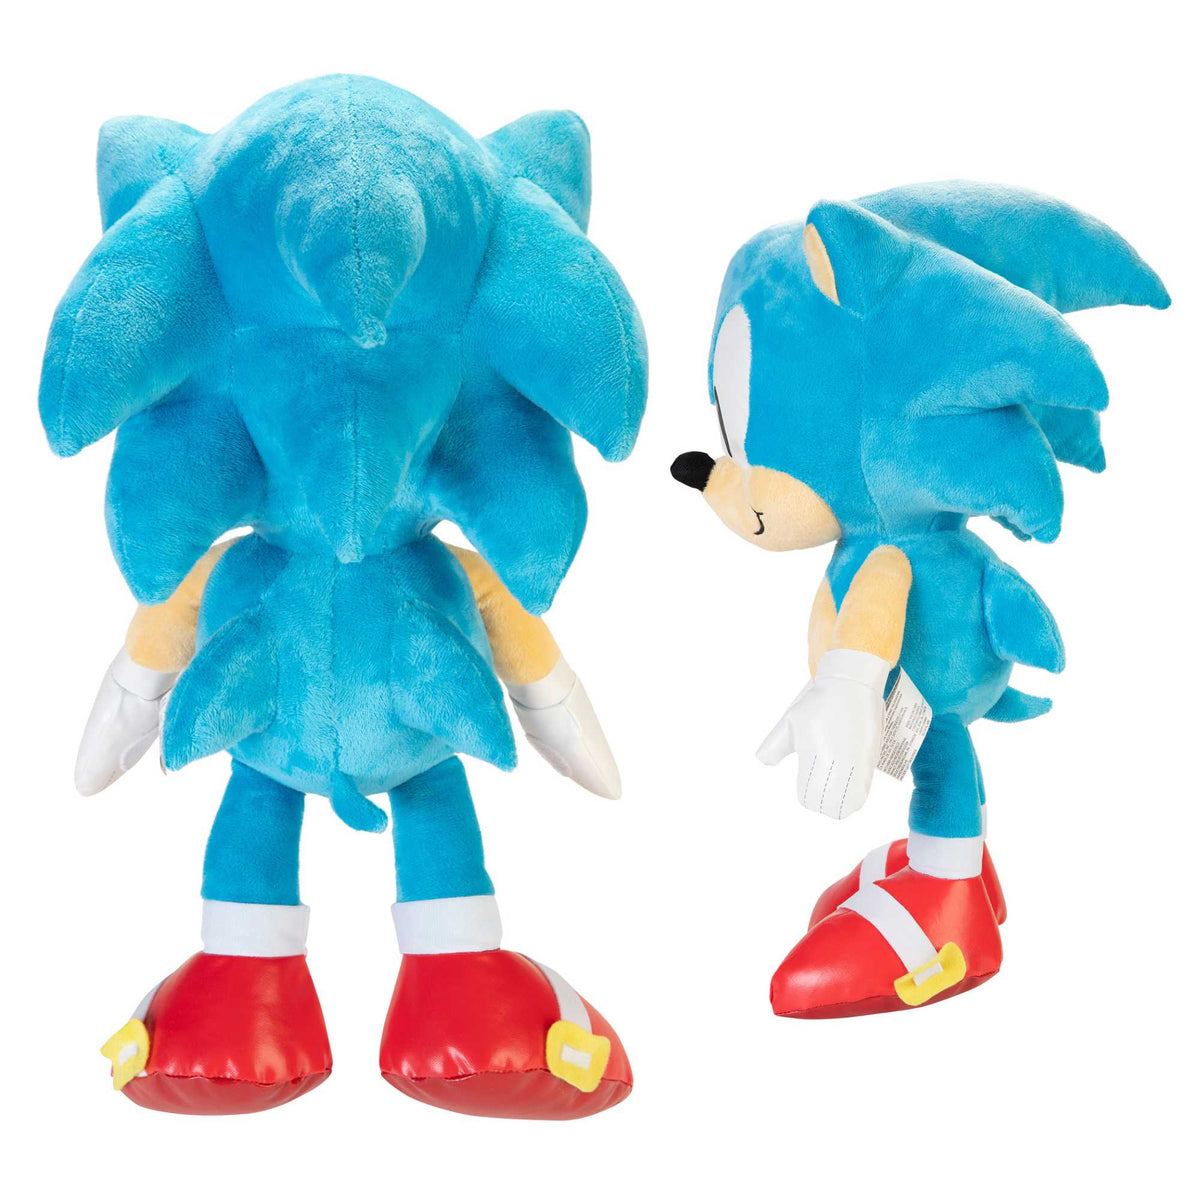 Sonic the Hedgehog Jumbo Plush Toy